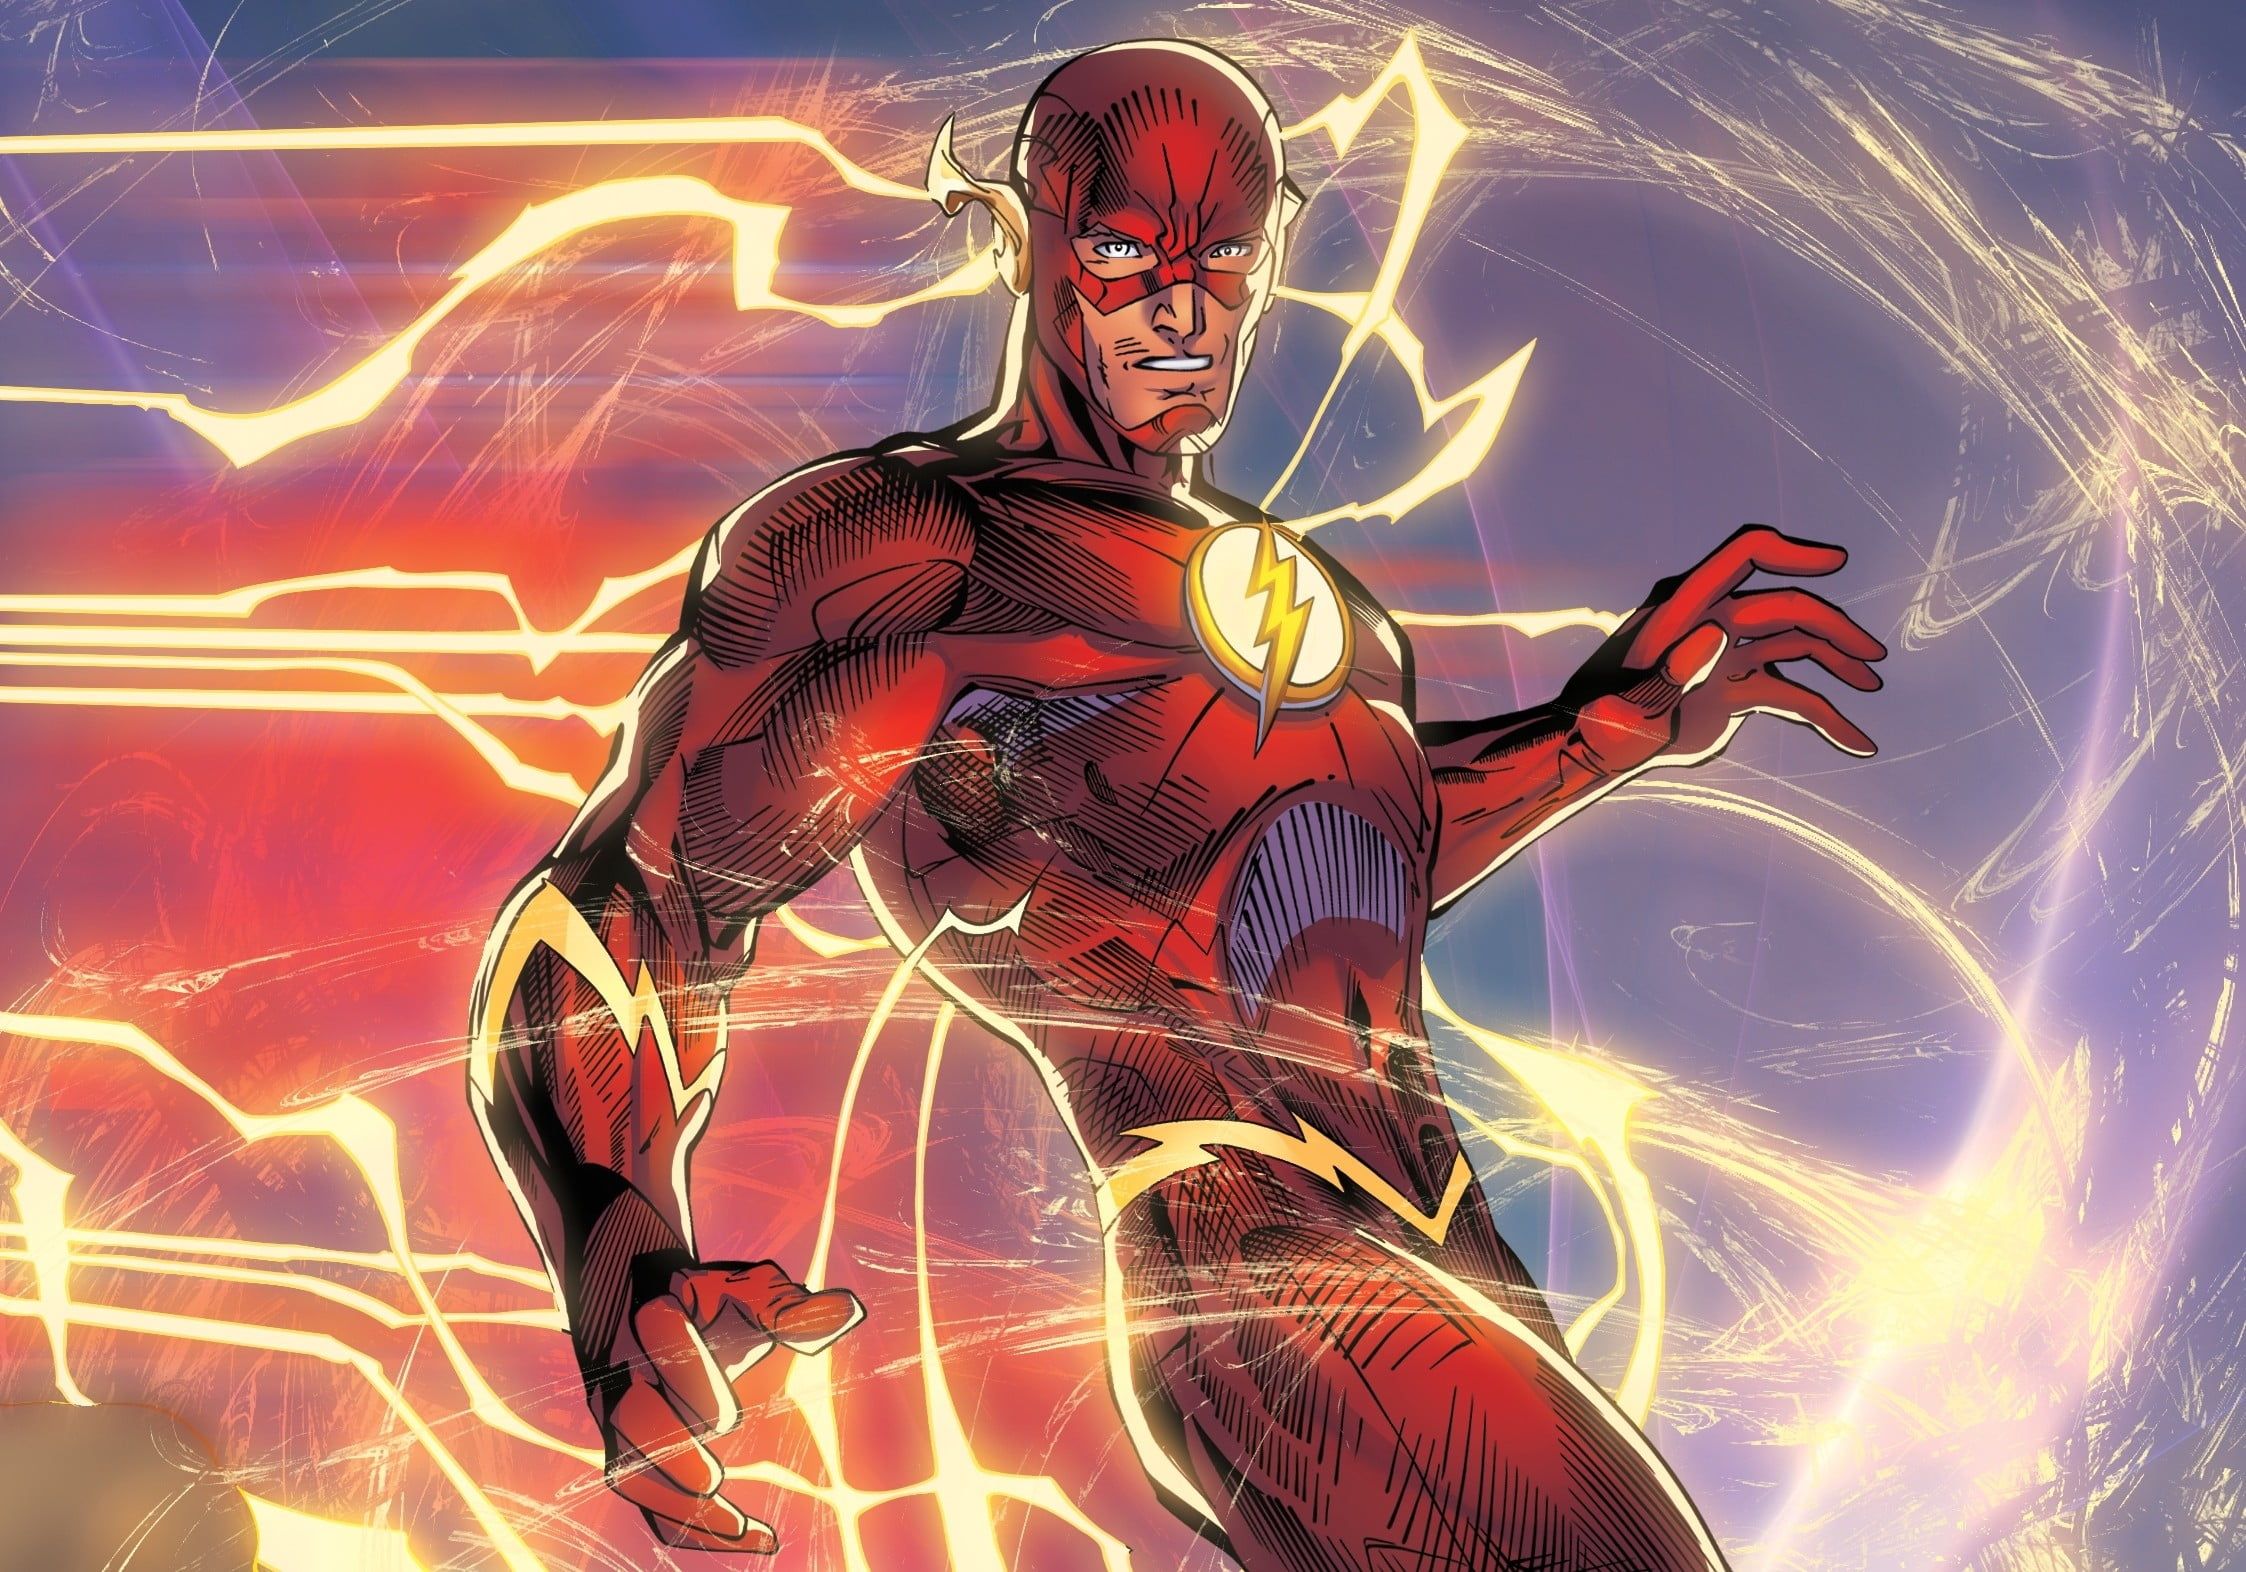 The Flash digital wallpaper #Flash #superhero DC Comics P #wallpaper #hdwallpaper #desktop. Flash comics, Digital wallpaper, Flash dc comics